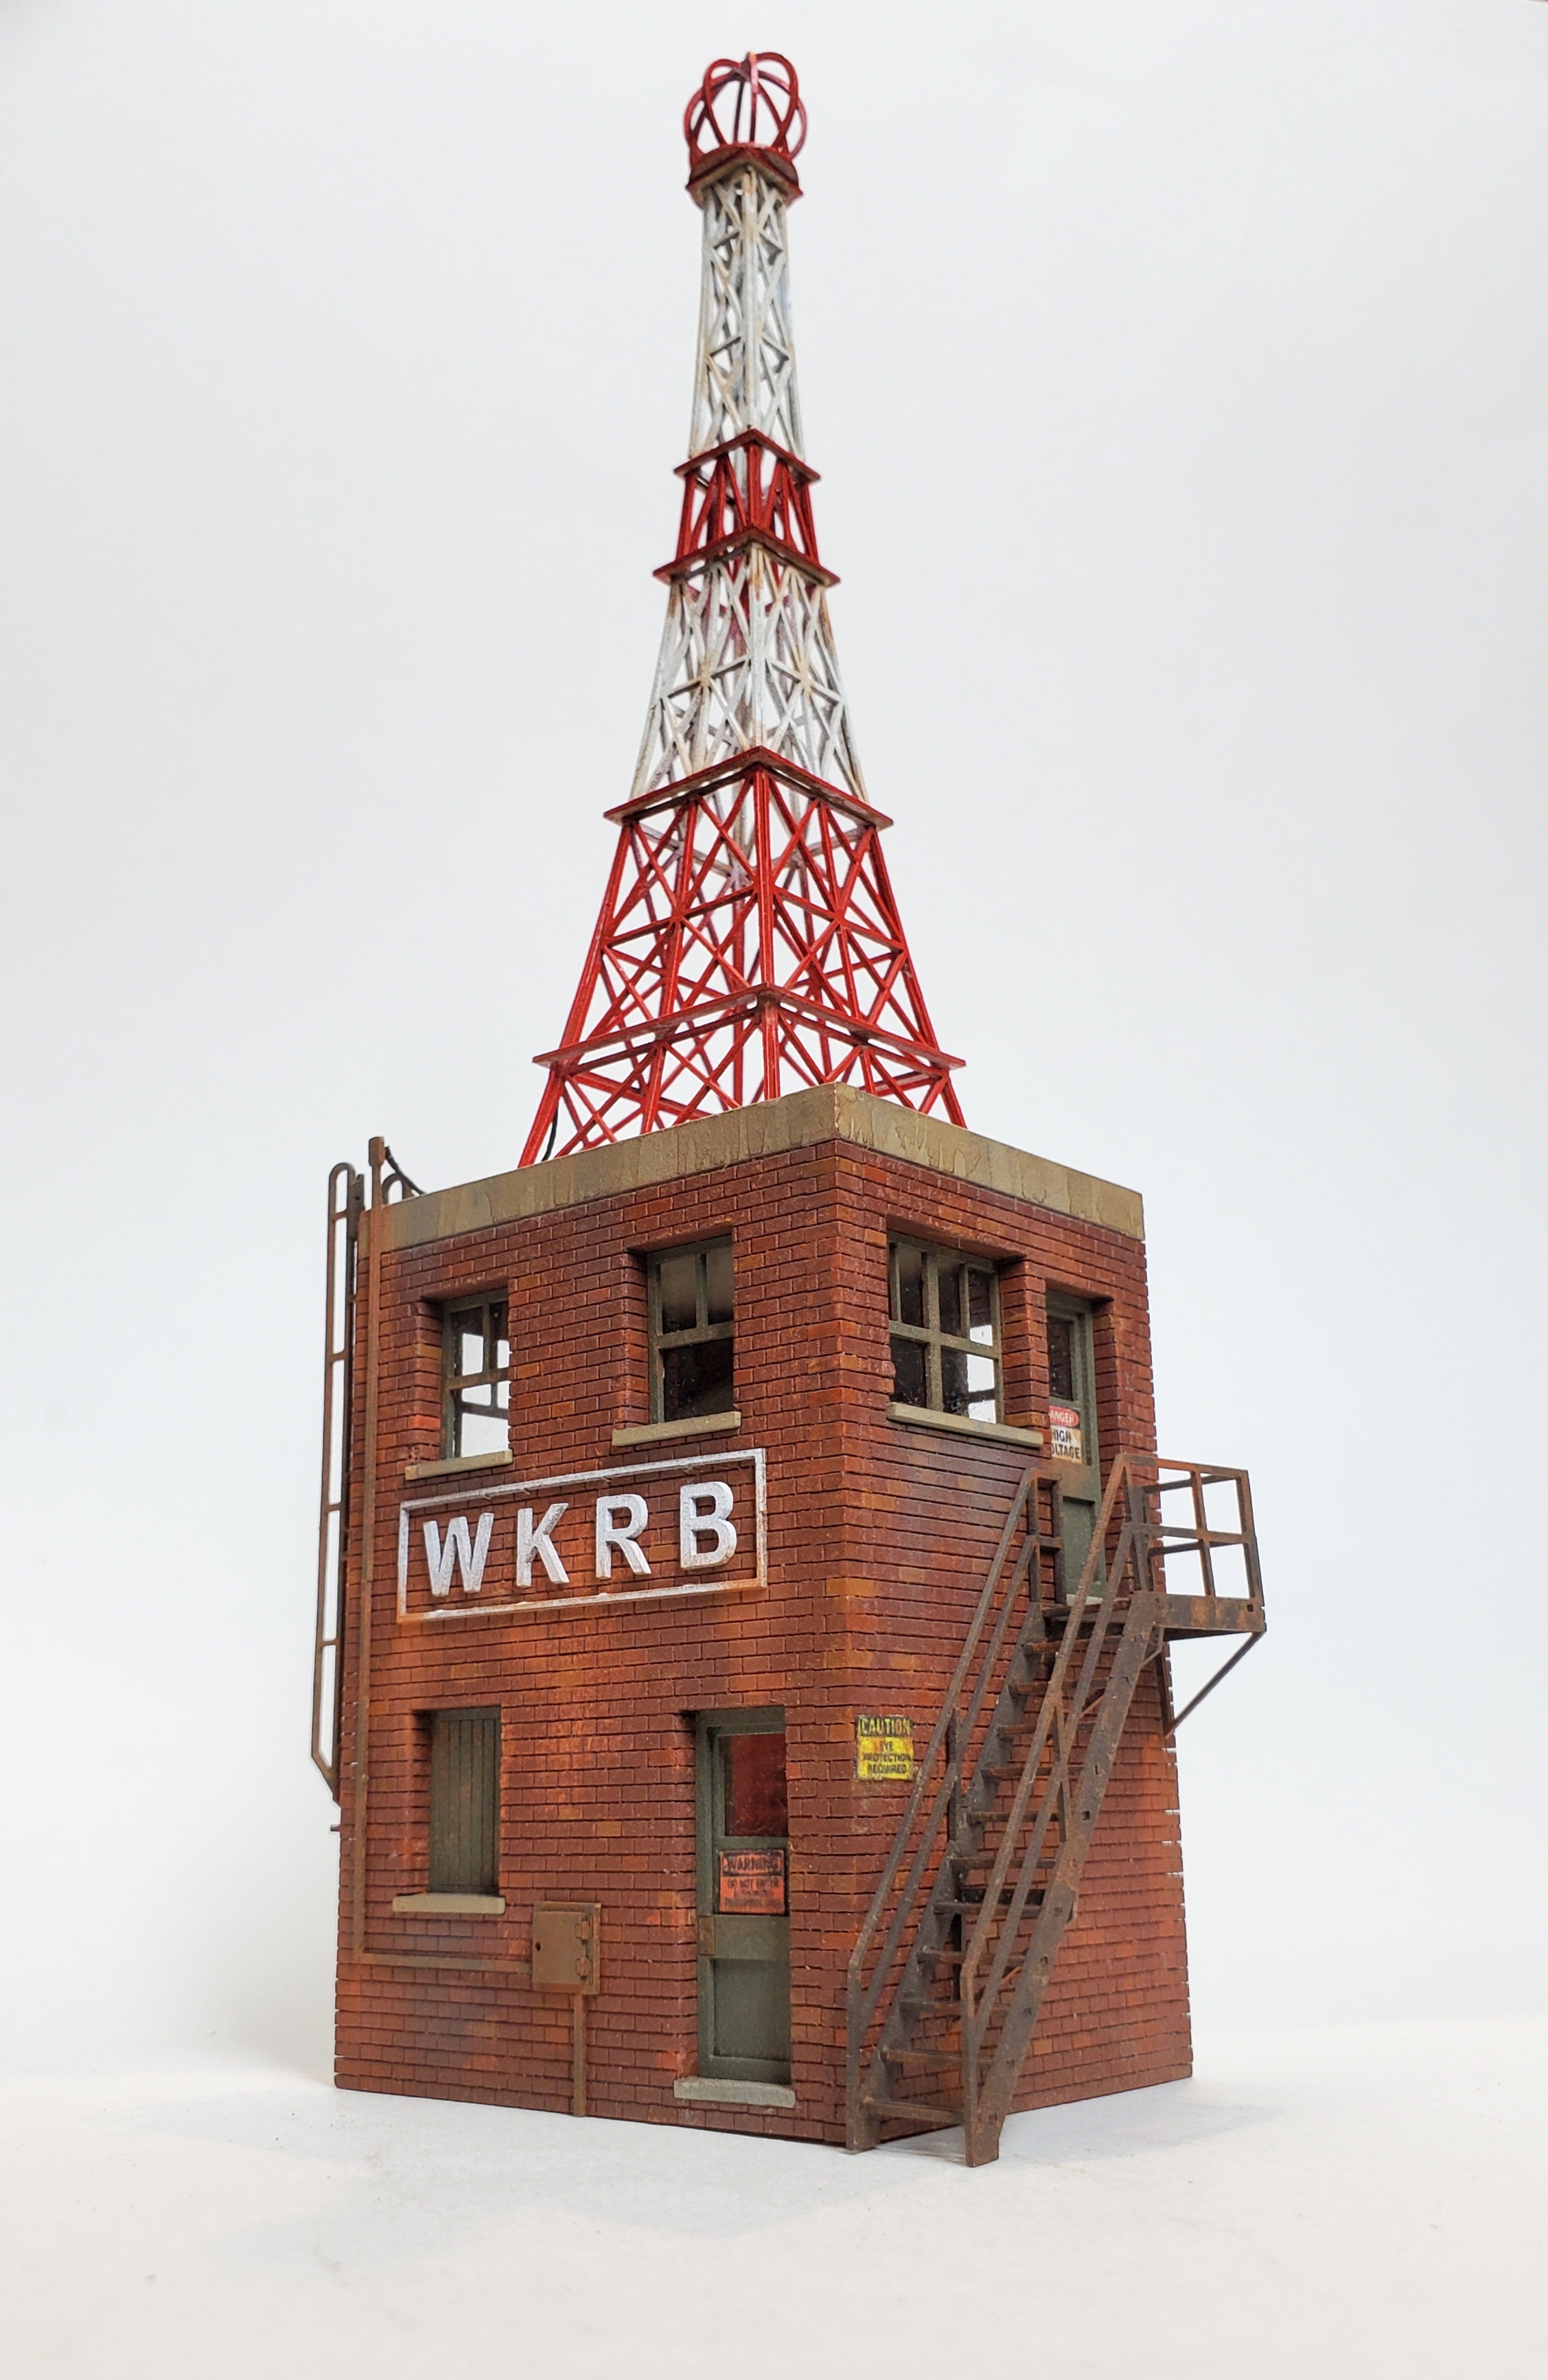 File:WCOM-LP radio tower.jpg - Wikipedia